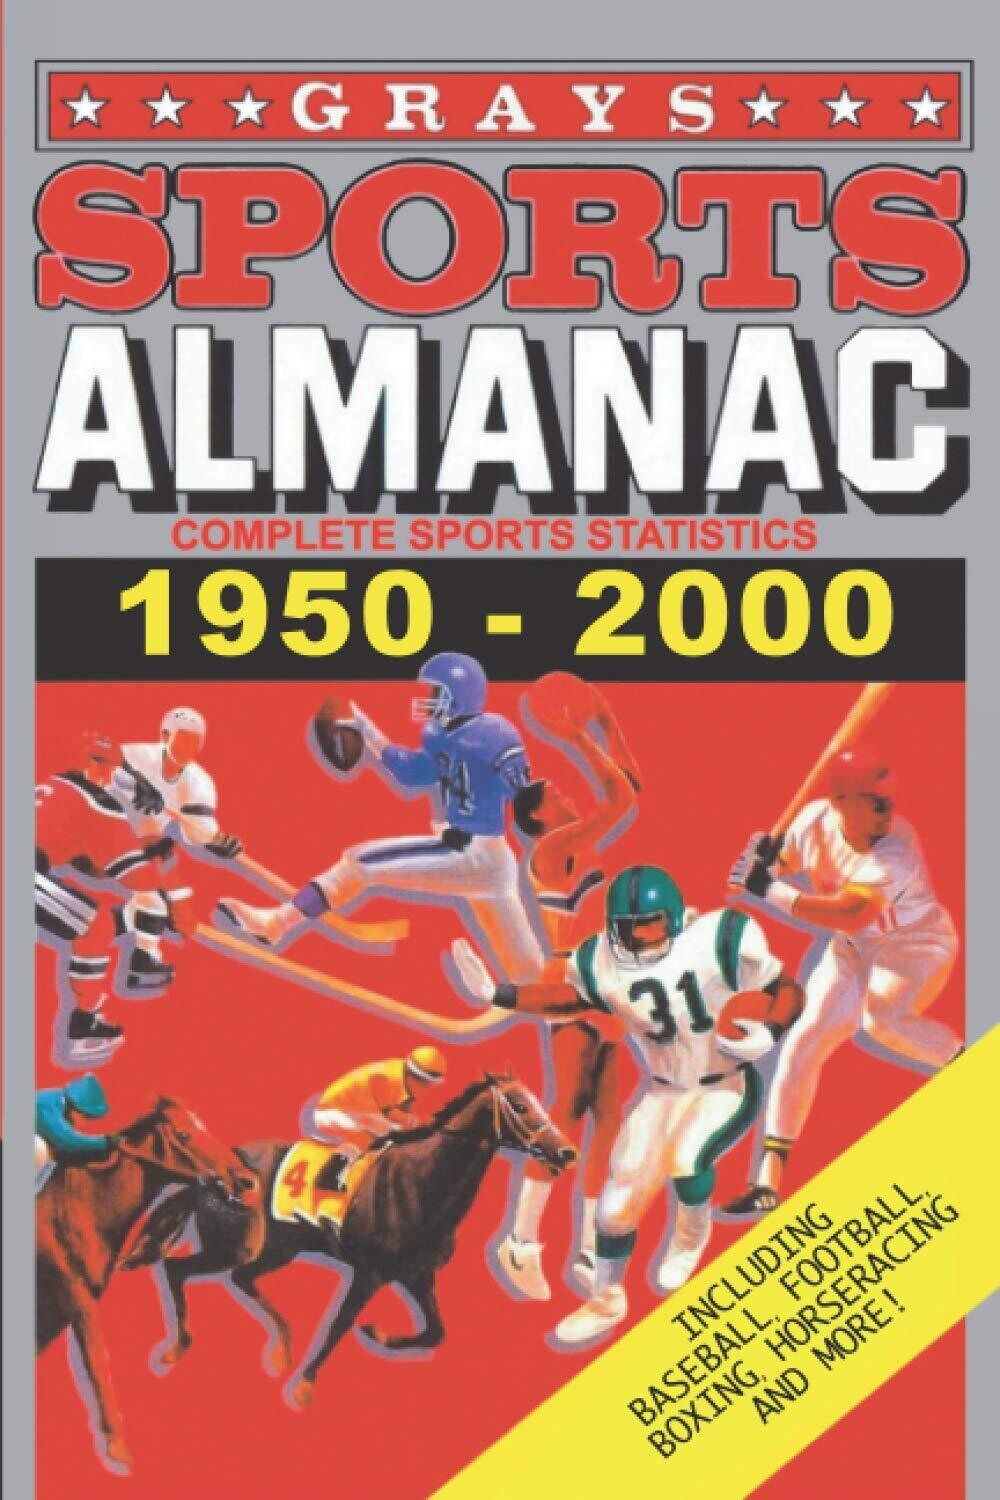 Grays Sports Almanac: Complete Sports Statistics 1950-2000 Book [Paperback]